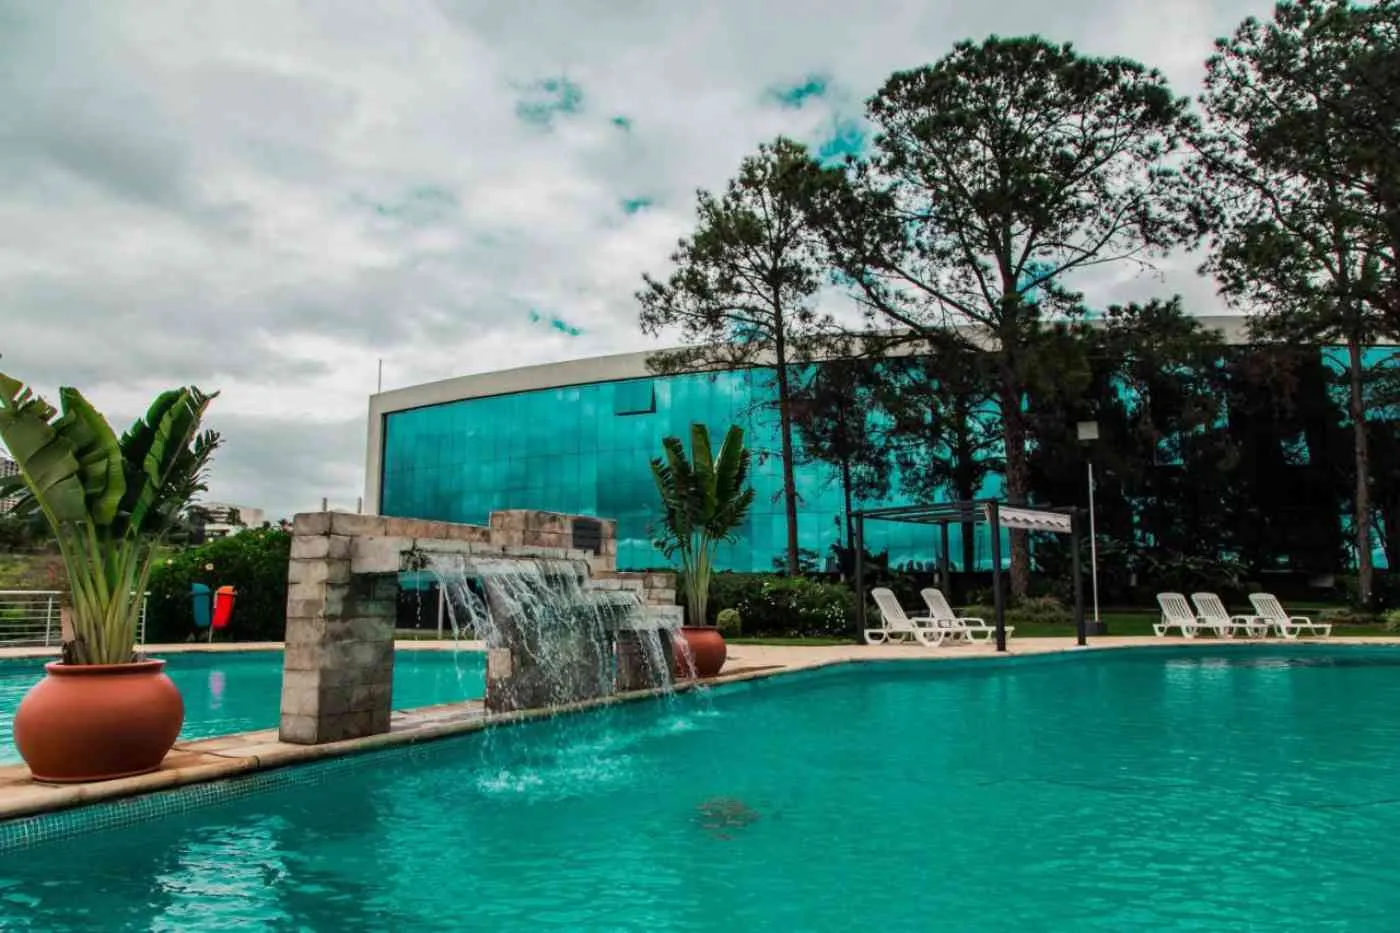 Hotel Casino Acaray no Paraguai